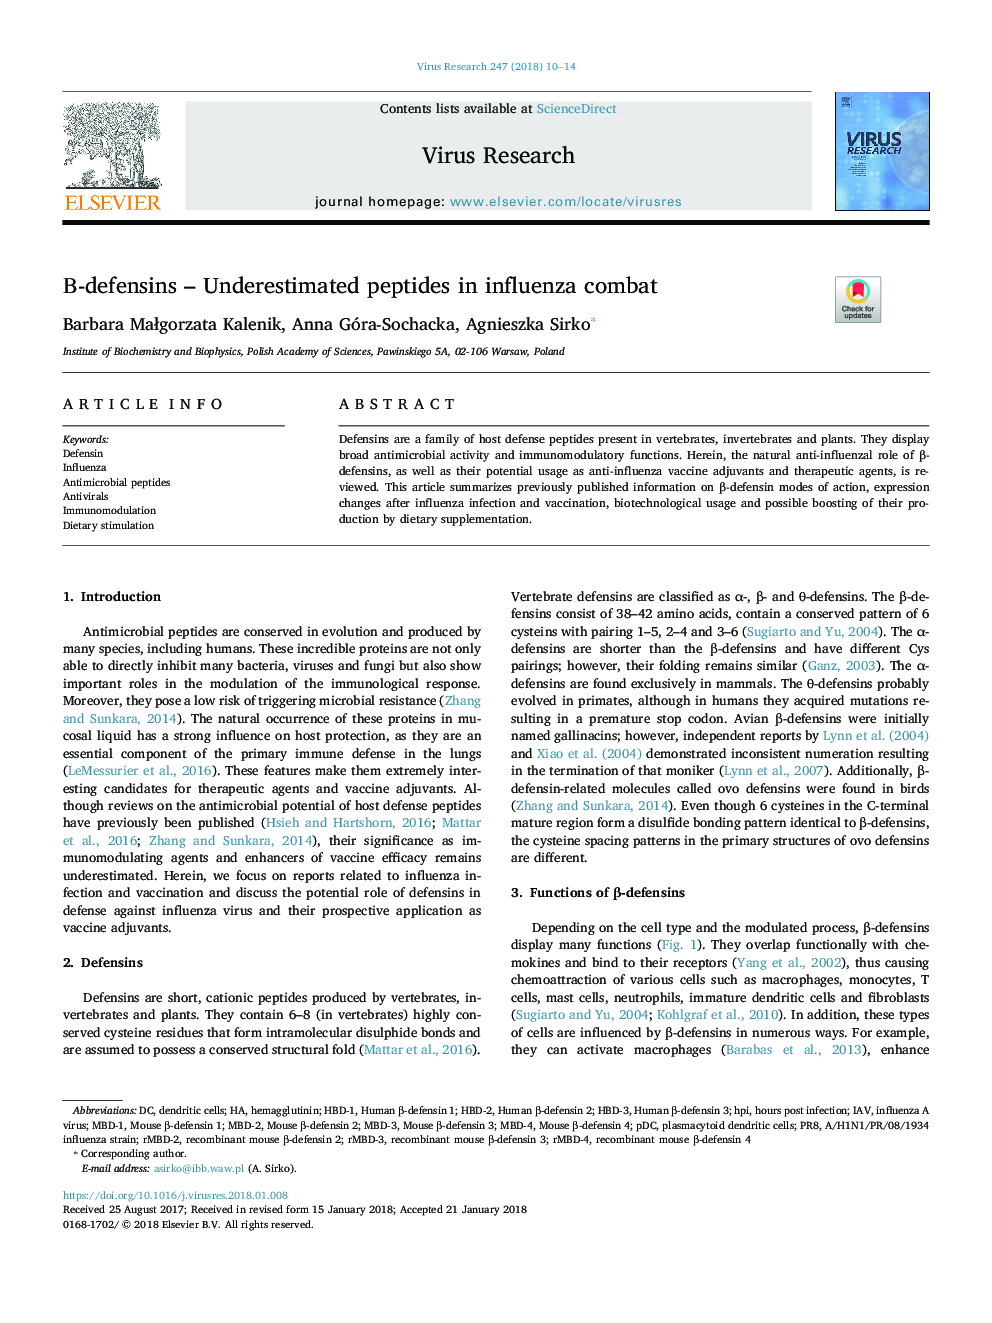 Î-defensins - Underestimated peptides in influenza combat